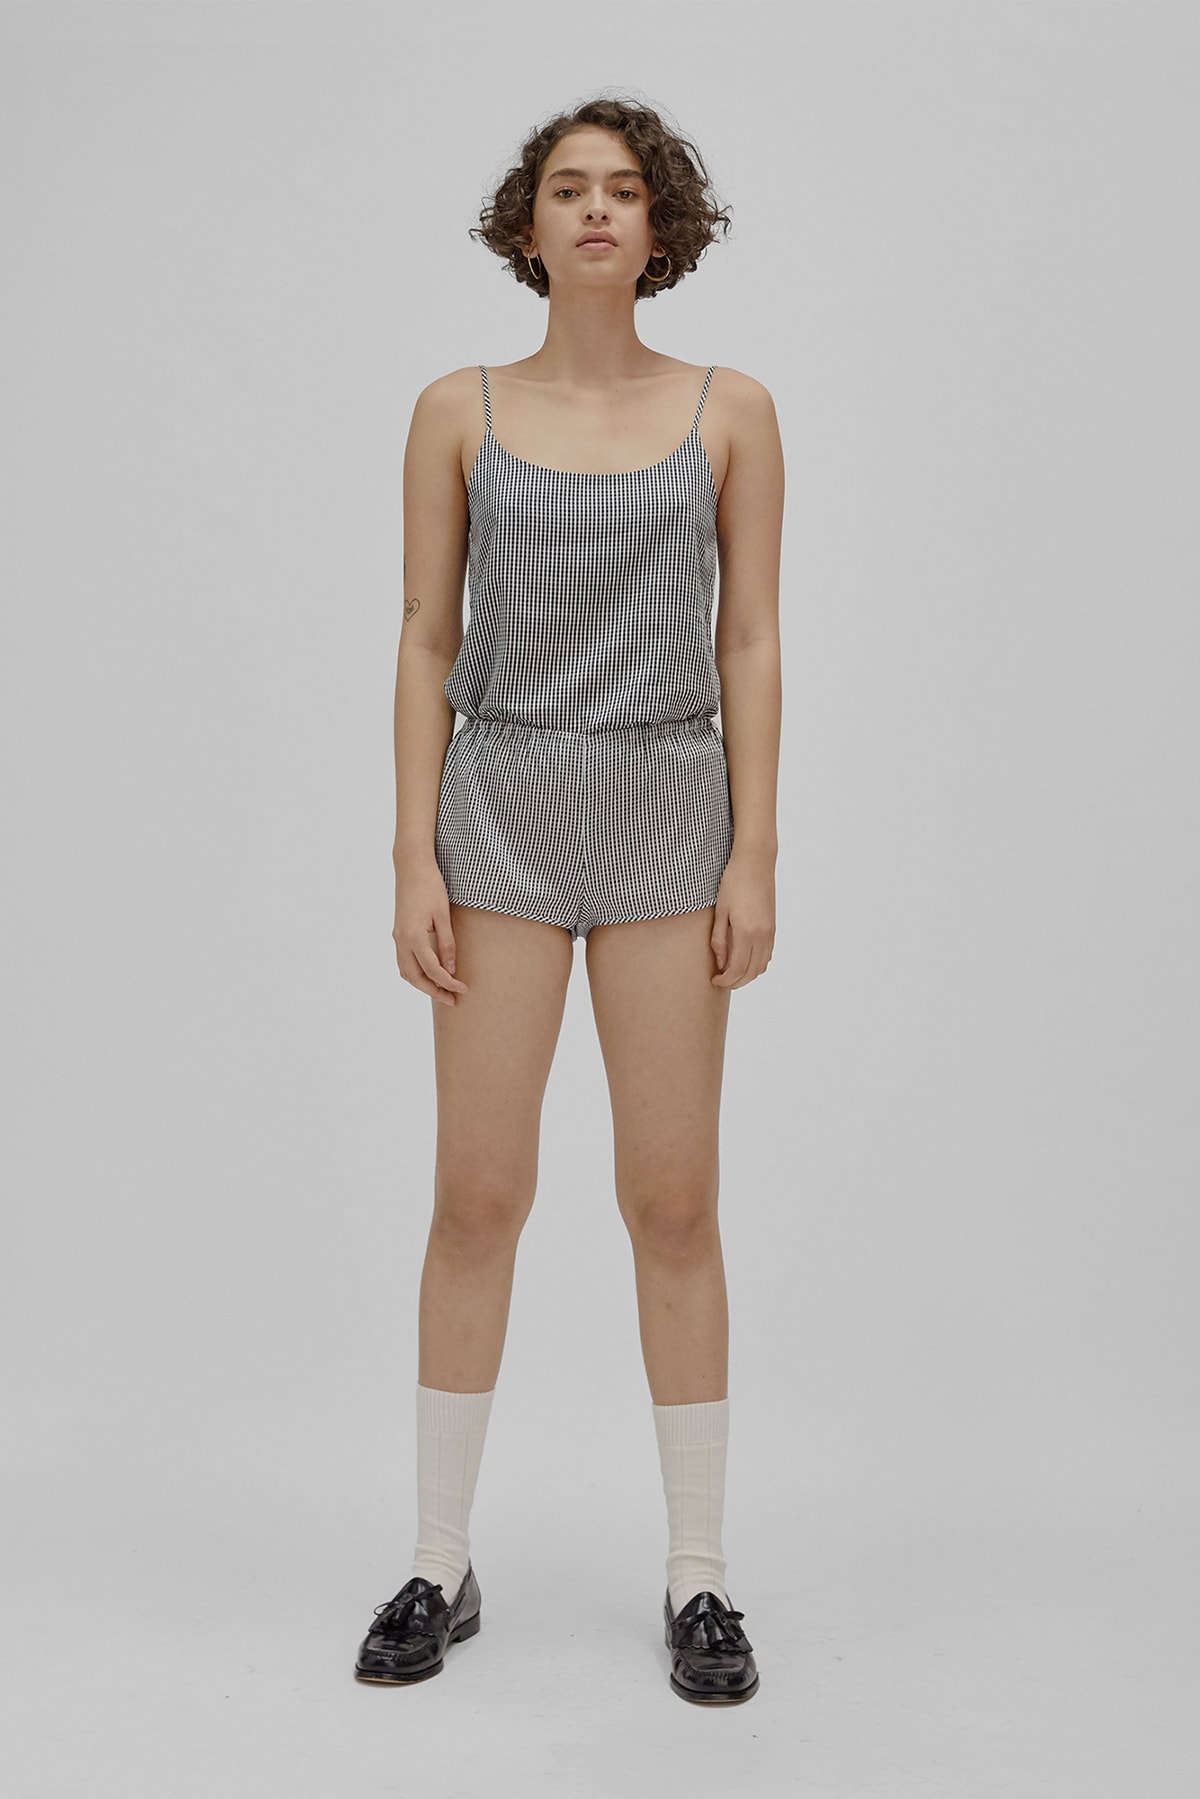 Les Girls Les Boys Spring/Summer 2021 Lingerie Collection Bra Underwear